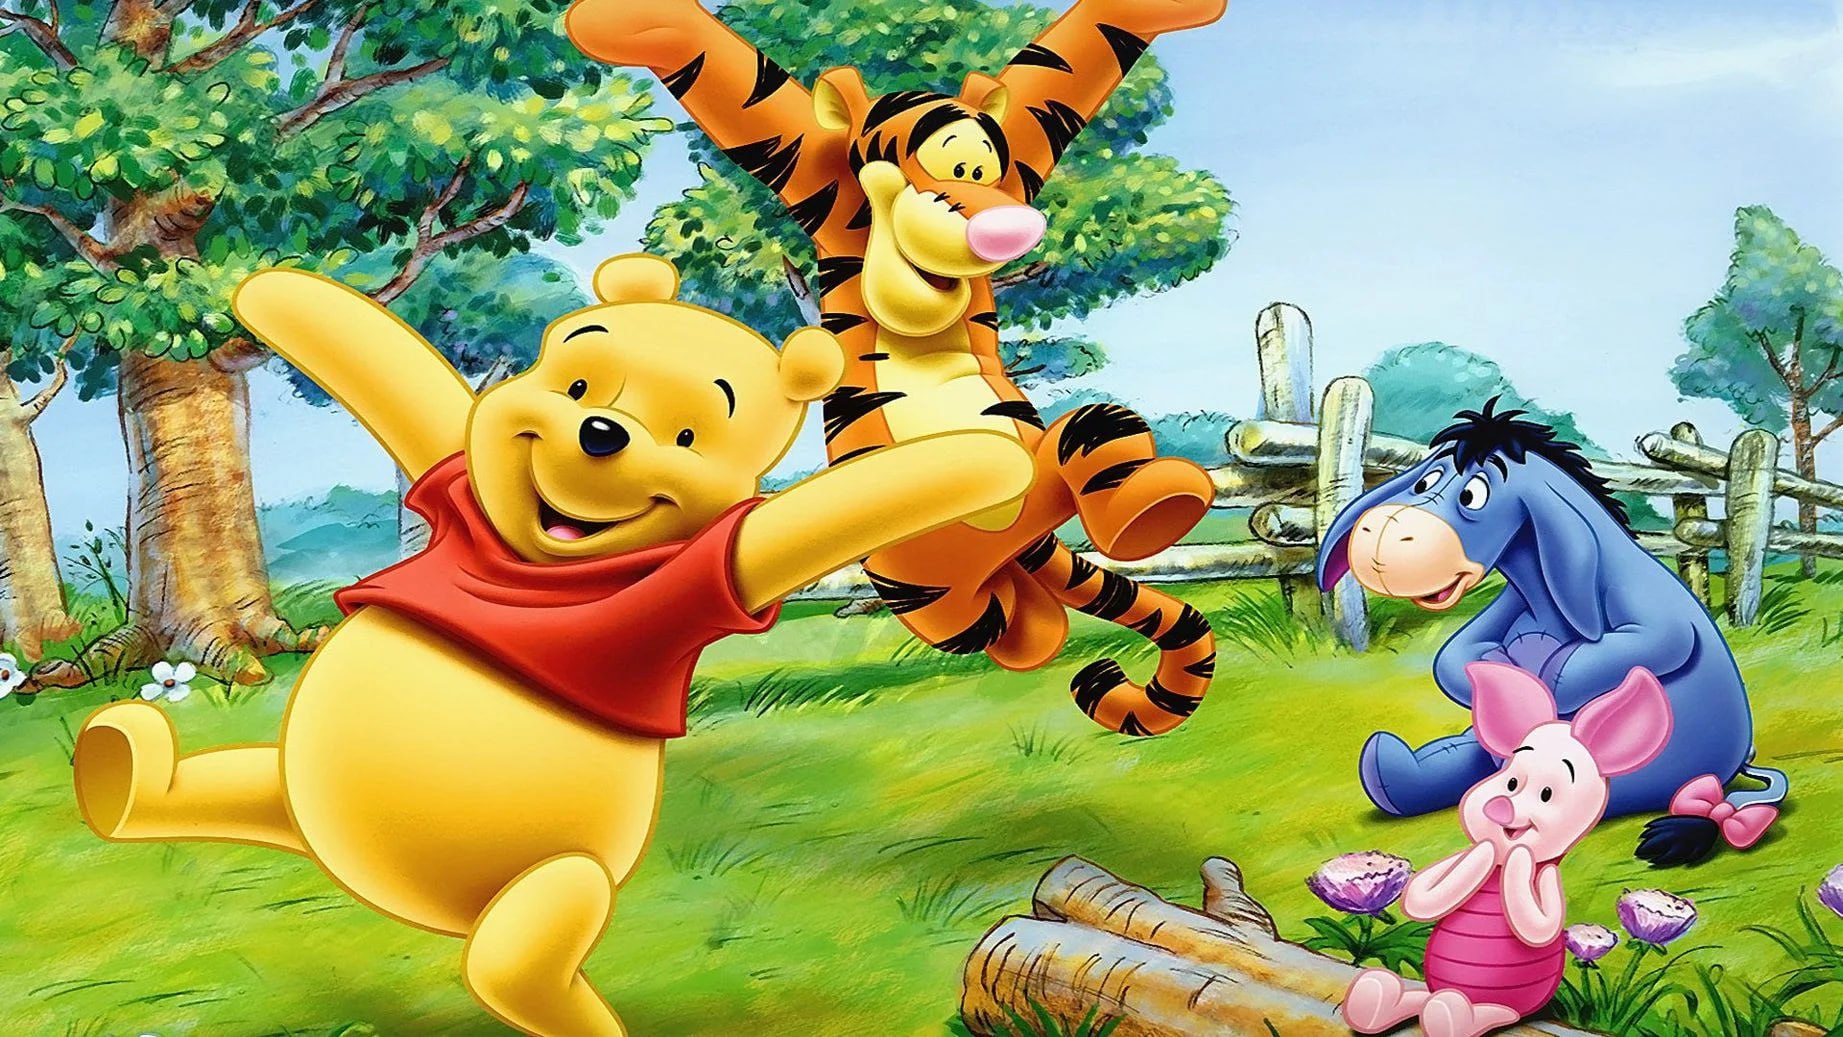 Winnie the pooh adventures. Винни-пух.